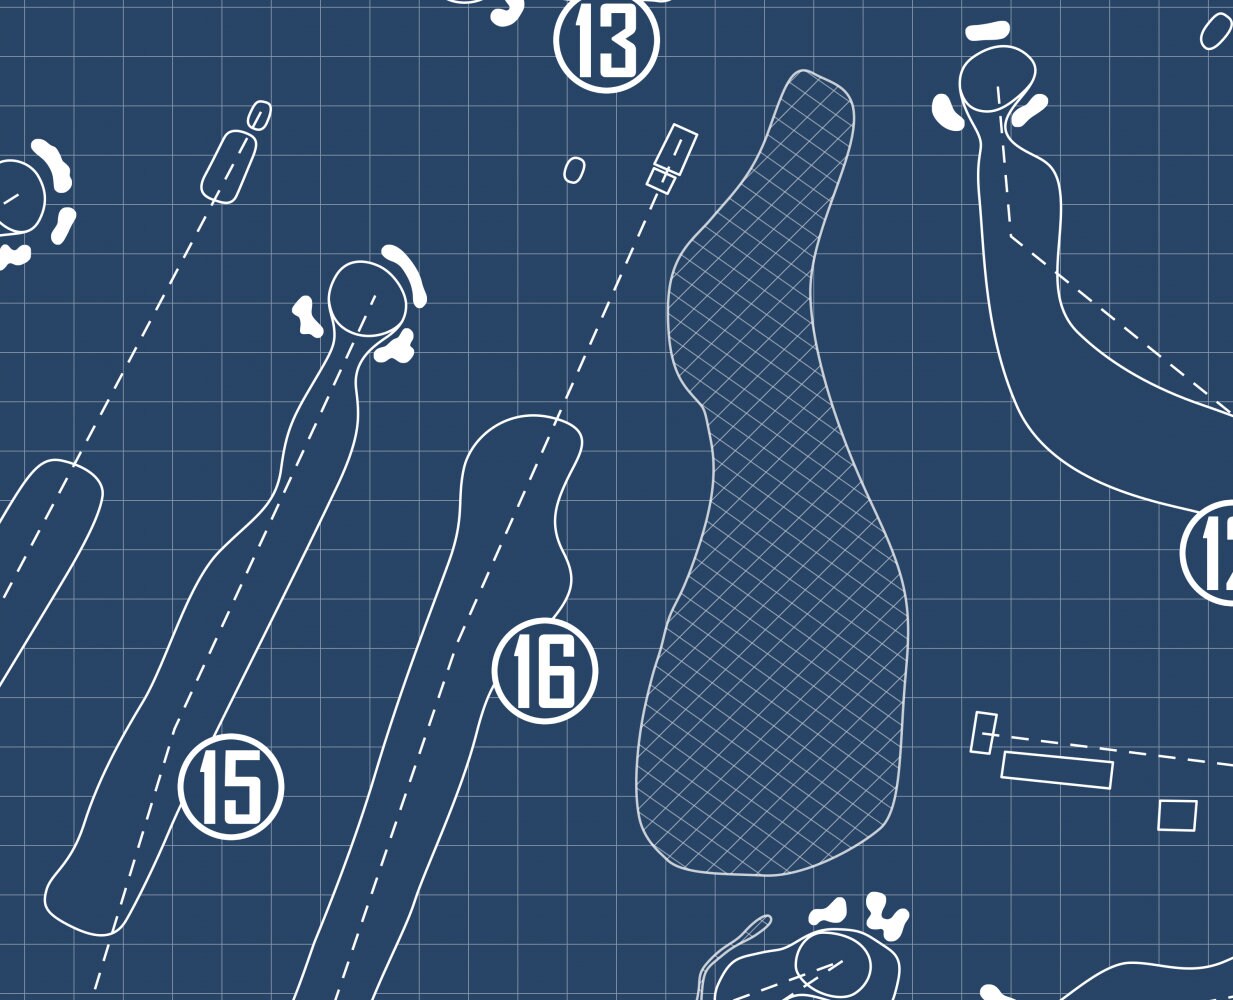 Columbia Golf & Country Club Blueprint (Print)